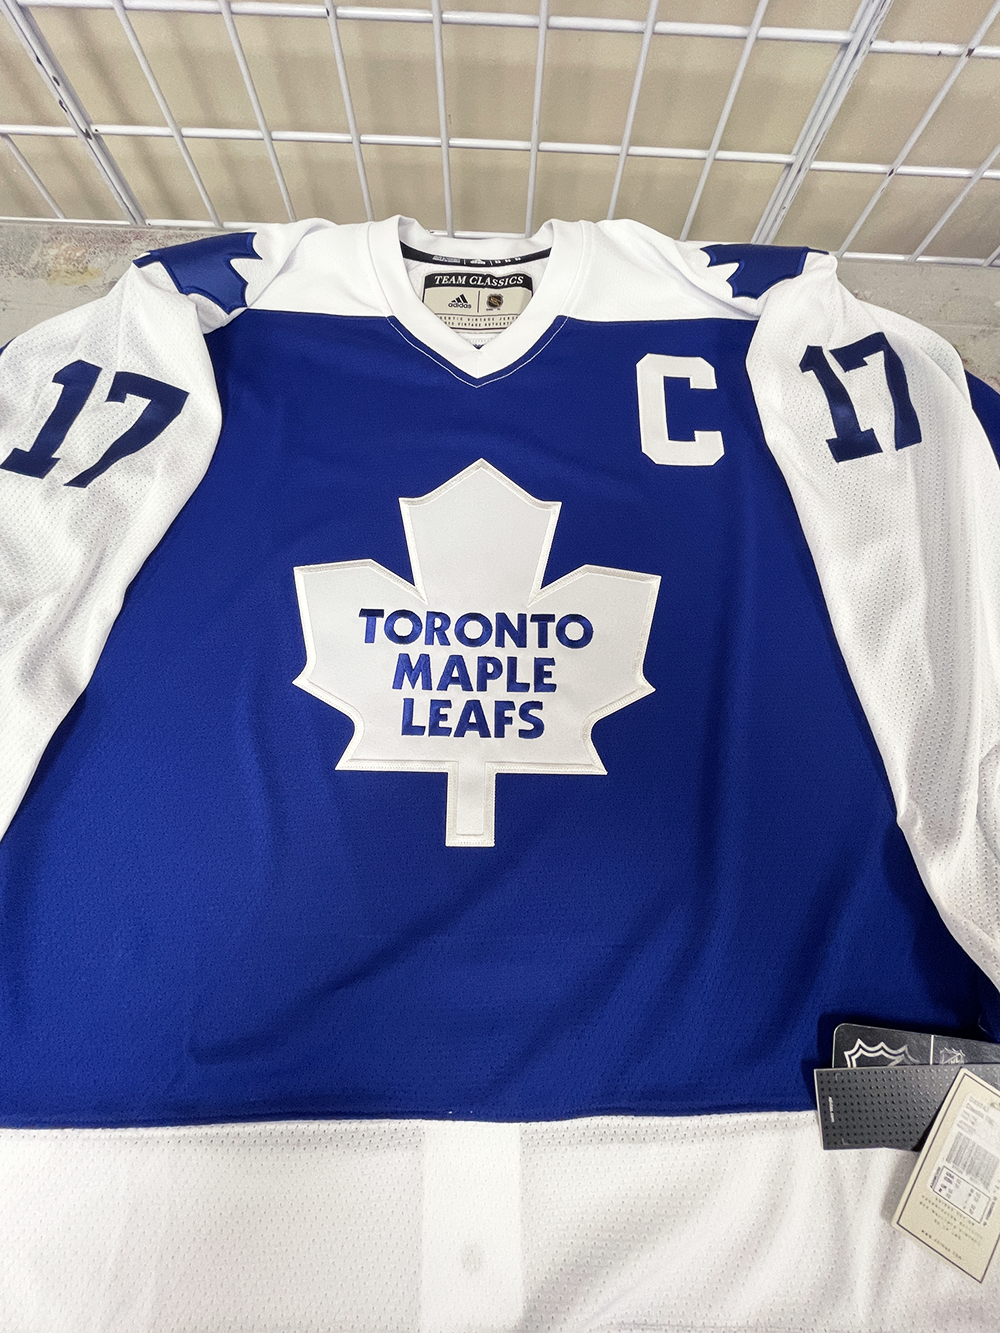 Toronto Maple Leafs - Jersey Teams Store